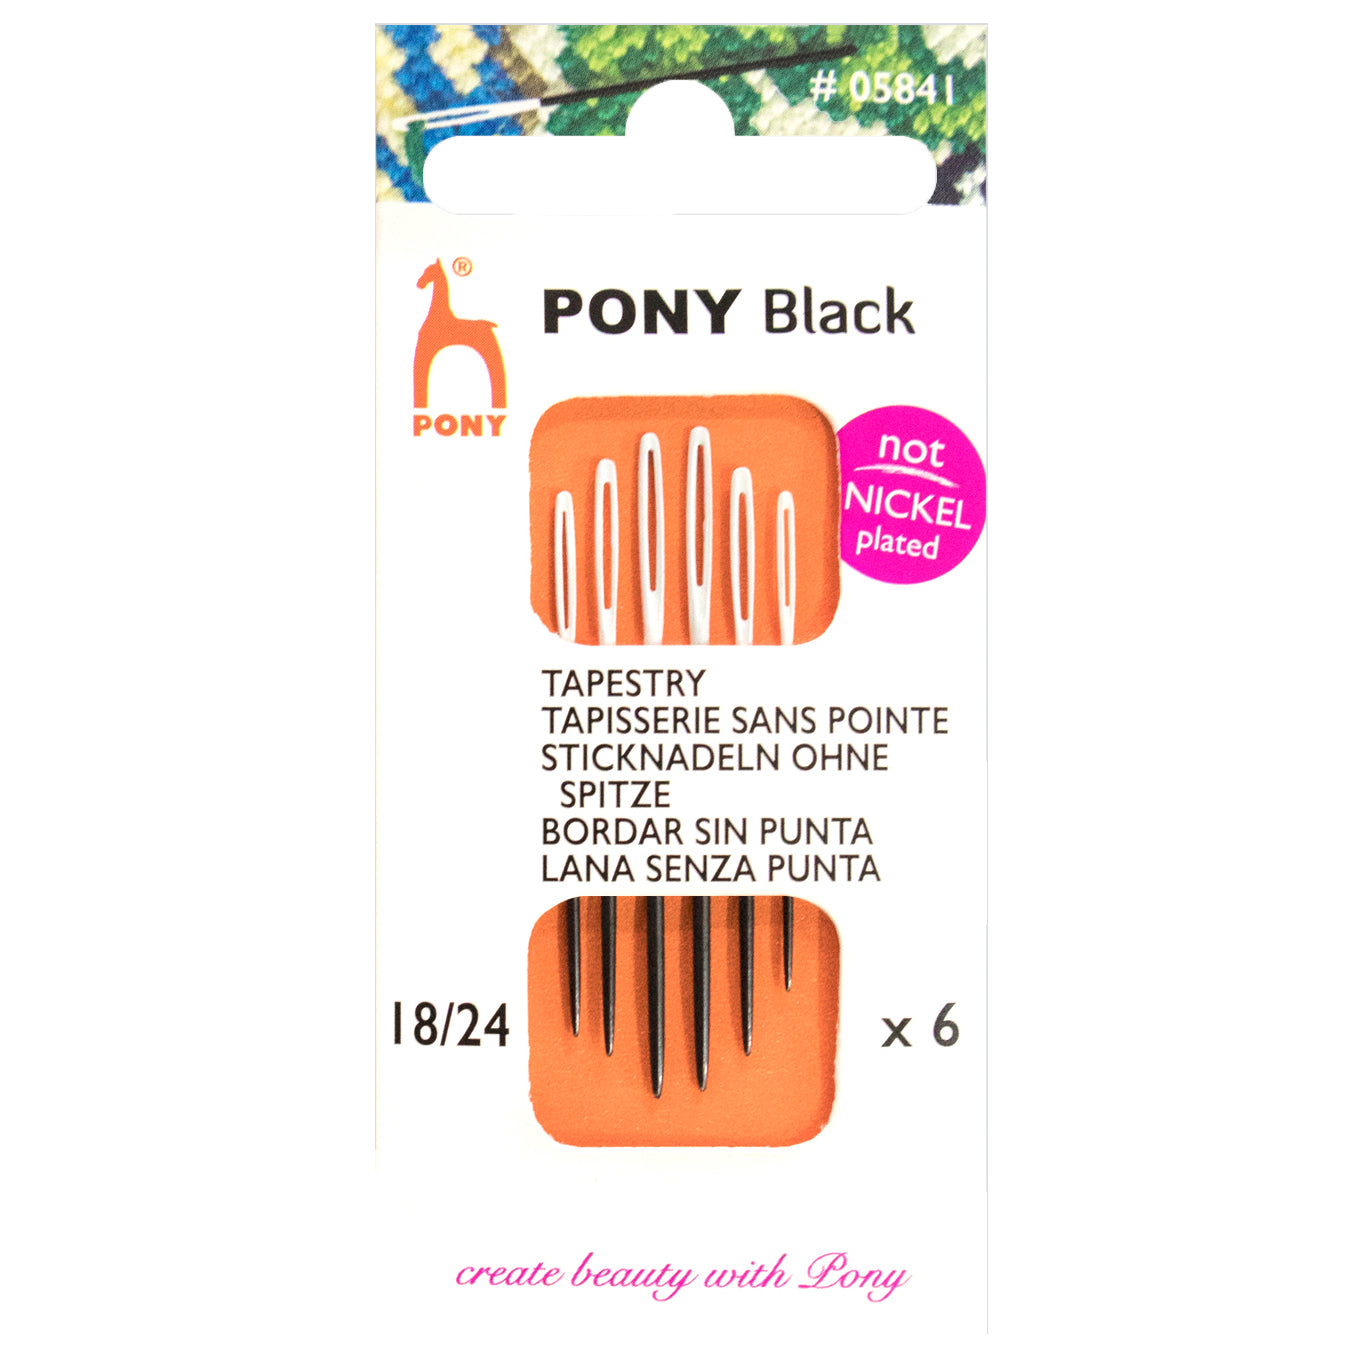 Pony Black Darning Needles